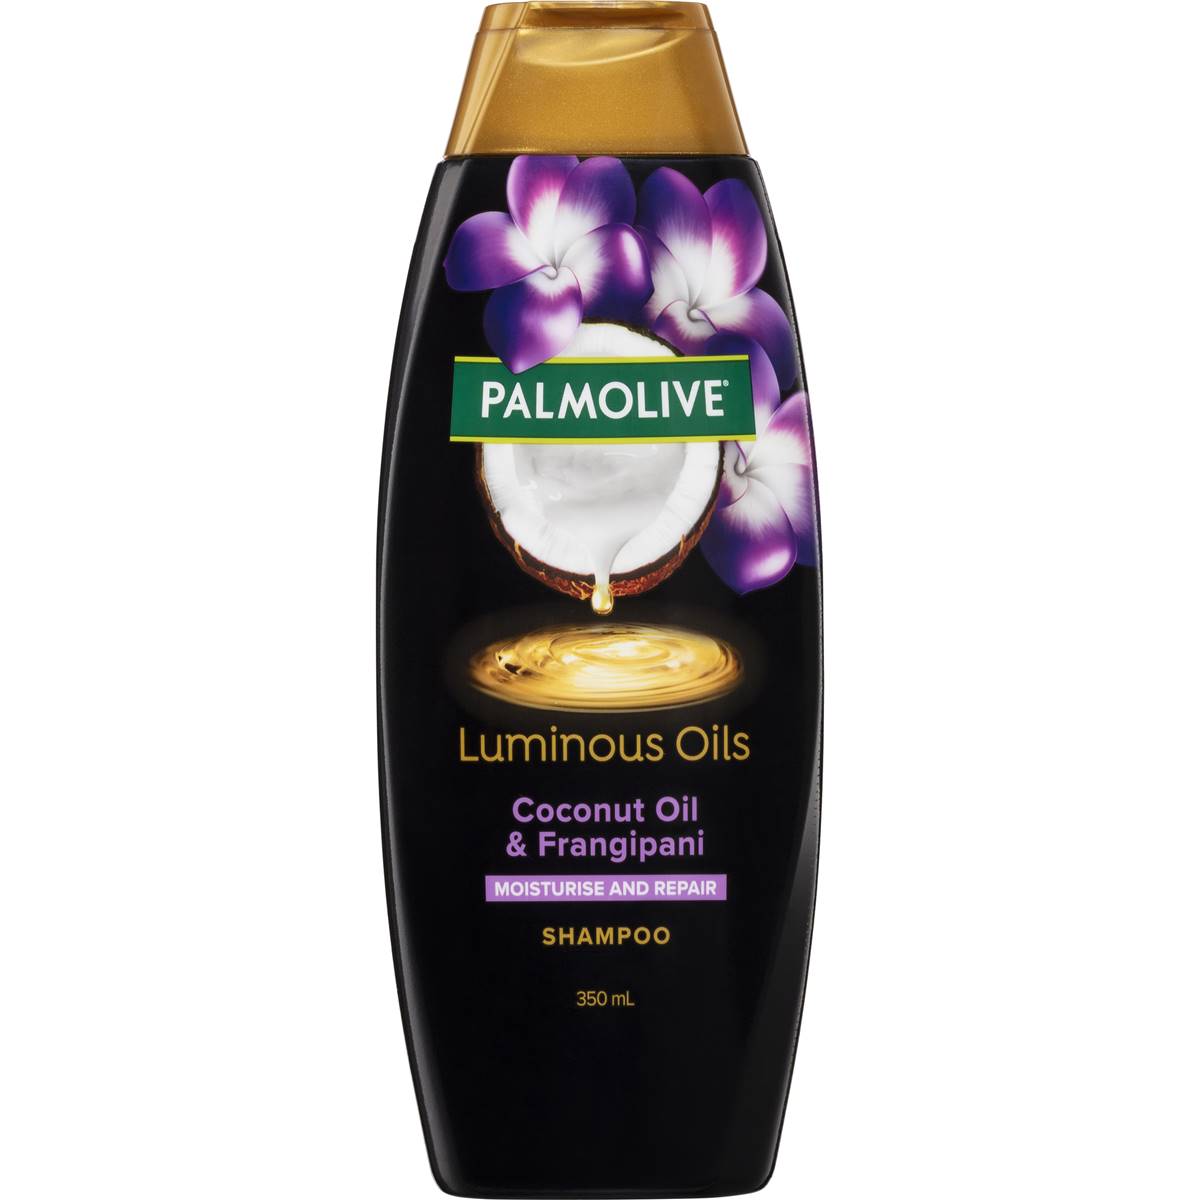 Palmolive Luminous Oils Shampoo Coconut Oil & Frangipani 350ml